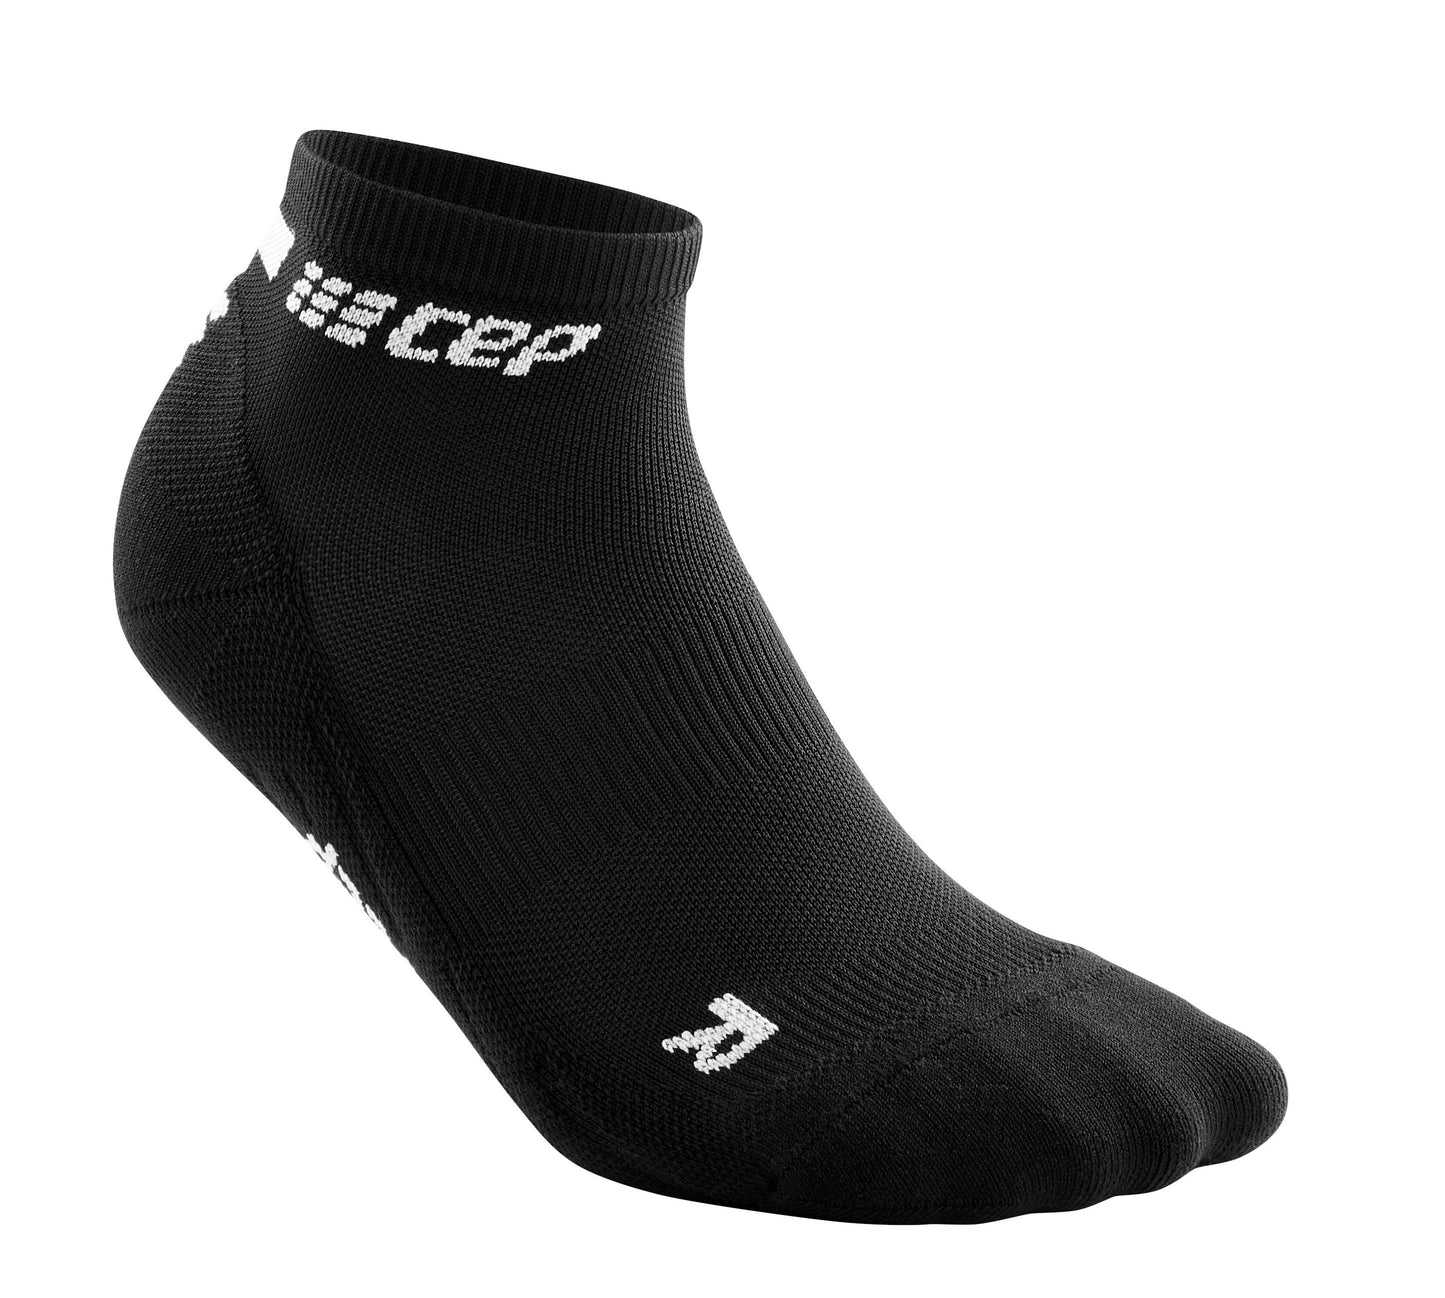 CEP Run Compression Socks Men's Low Cut - Black